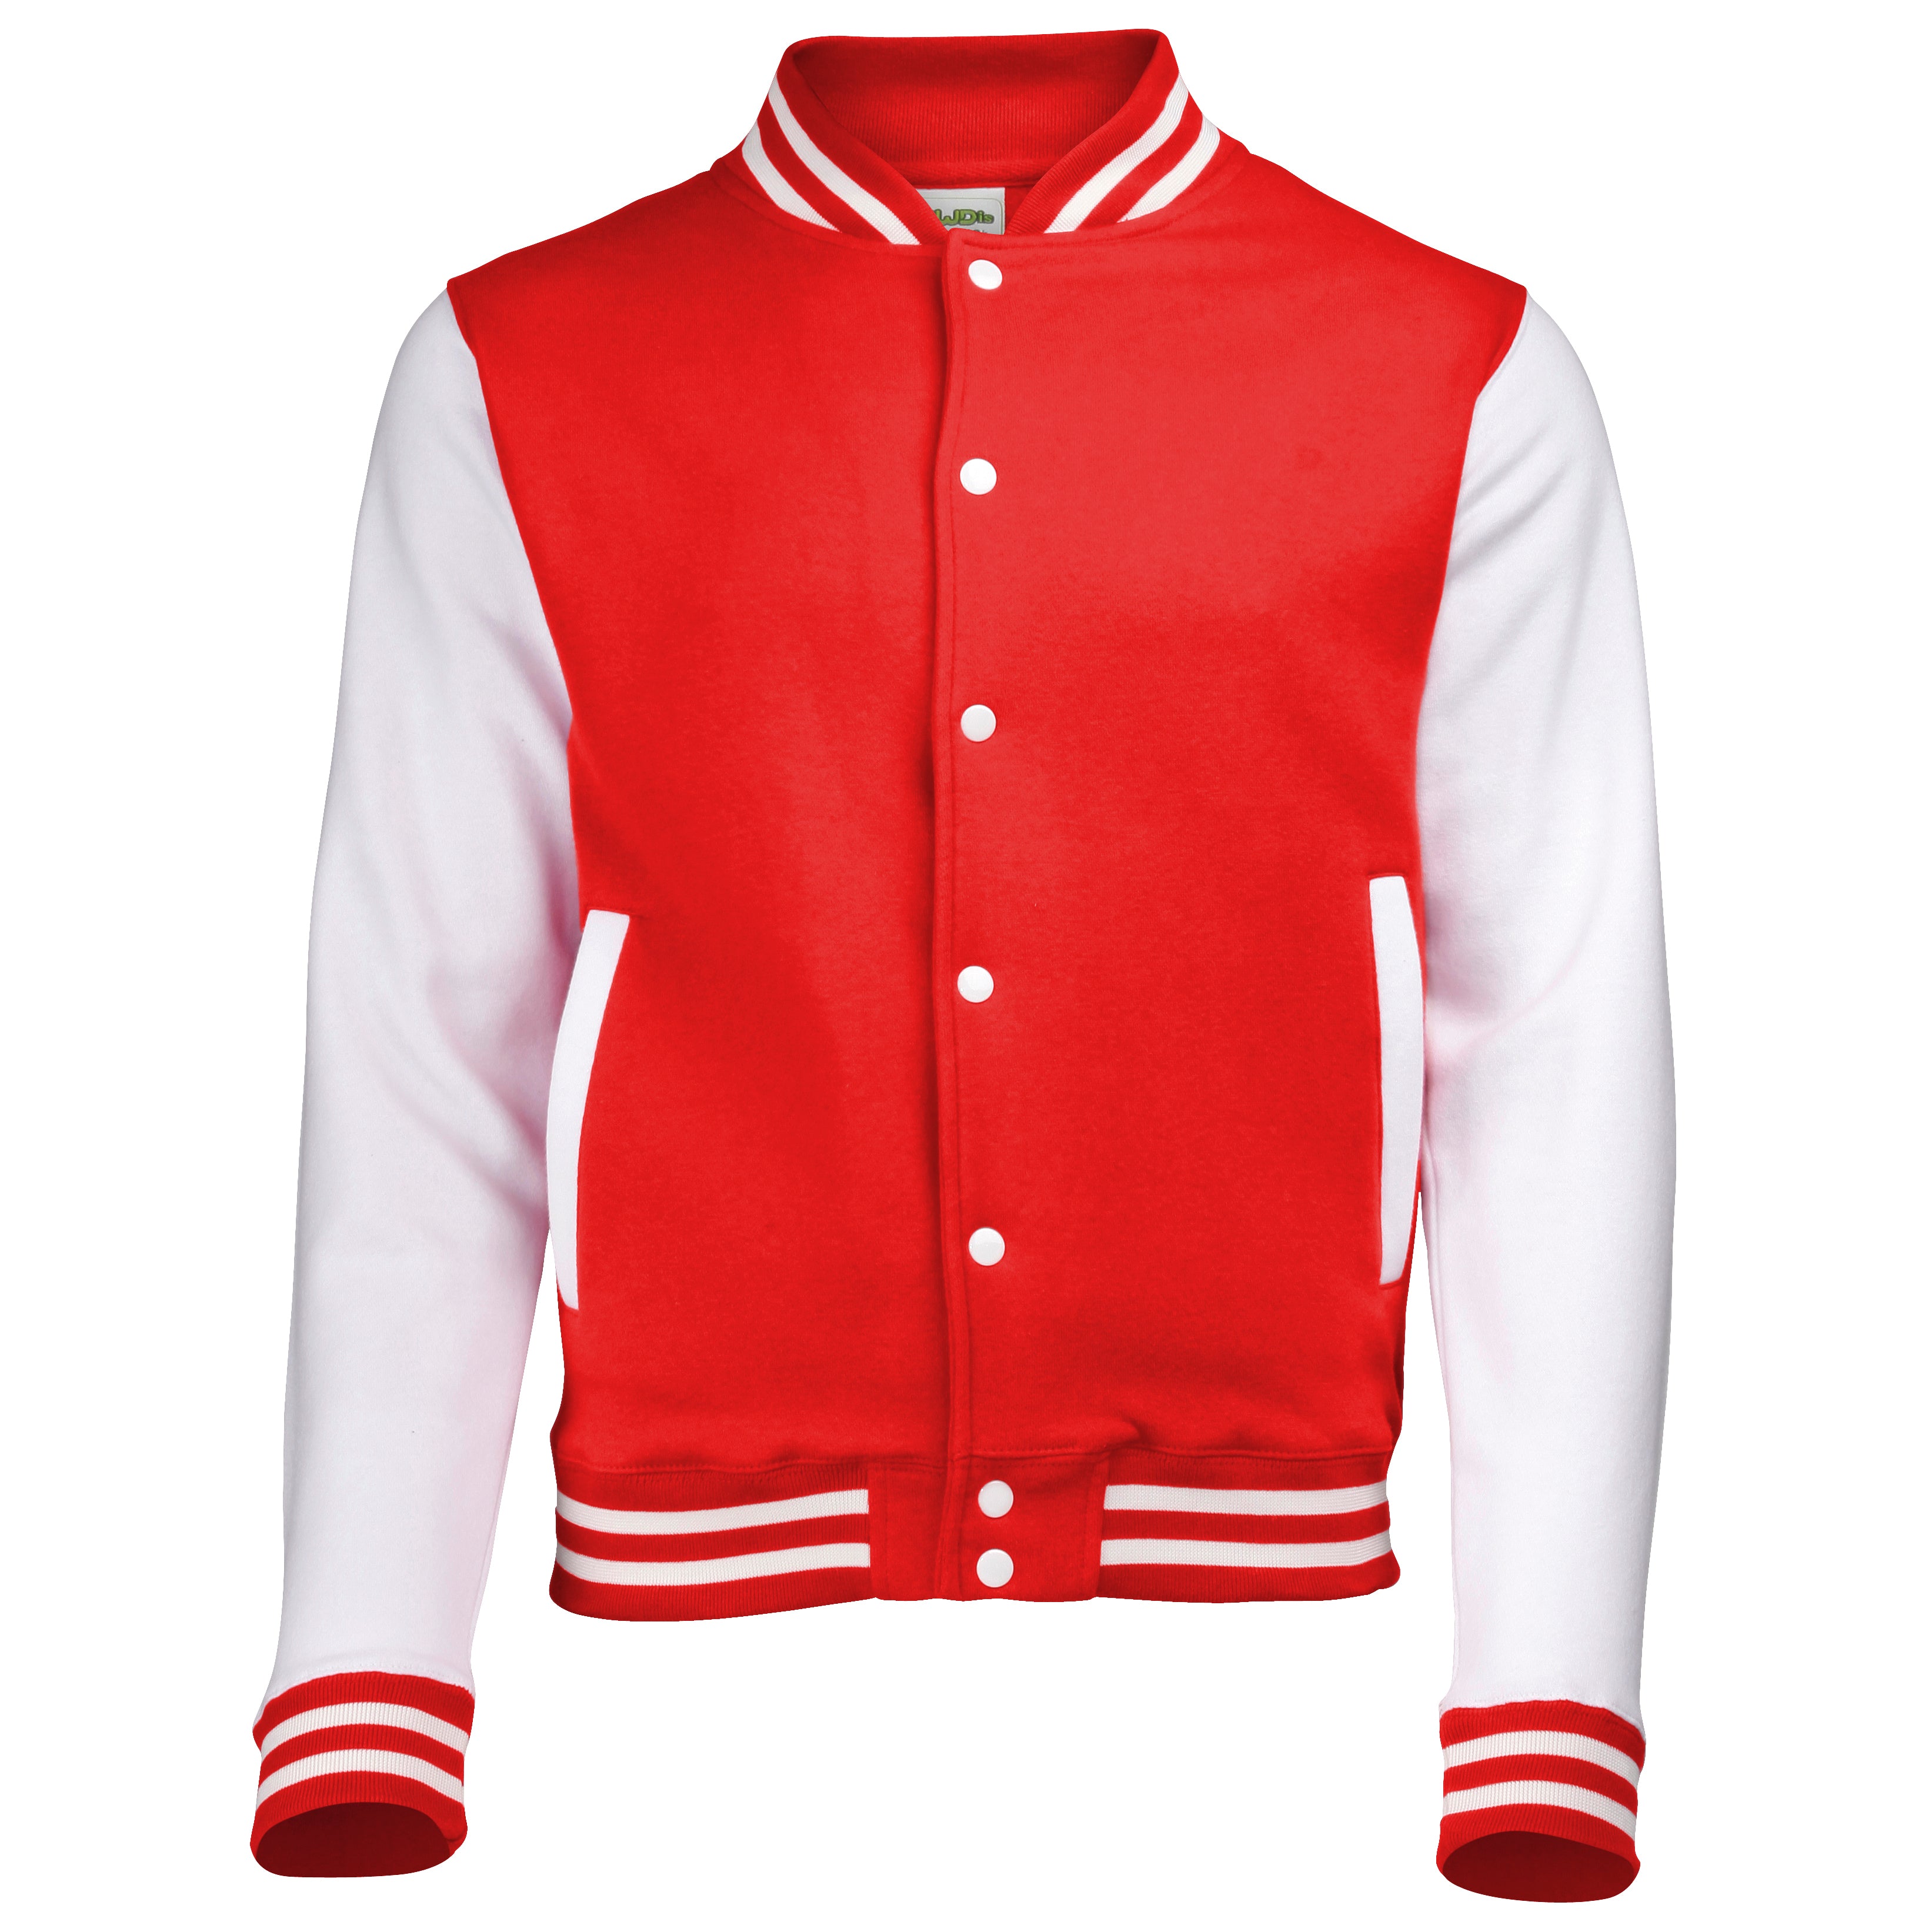 WISH Academy High School Full Zip Sports Jacket w/ House –